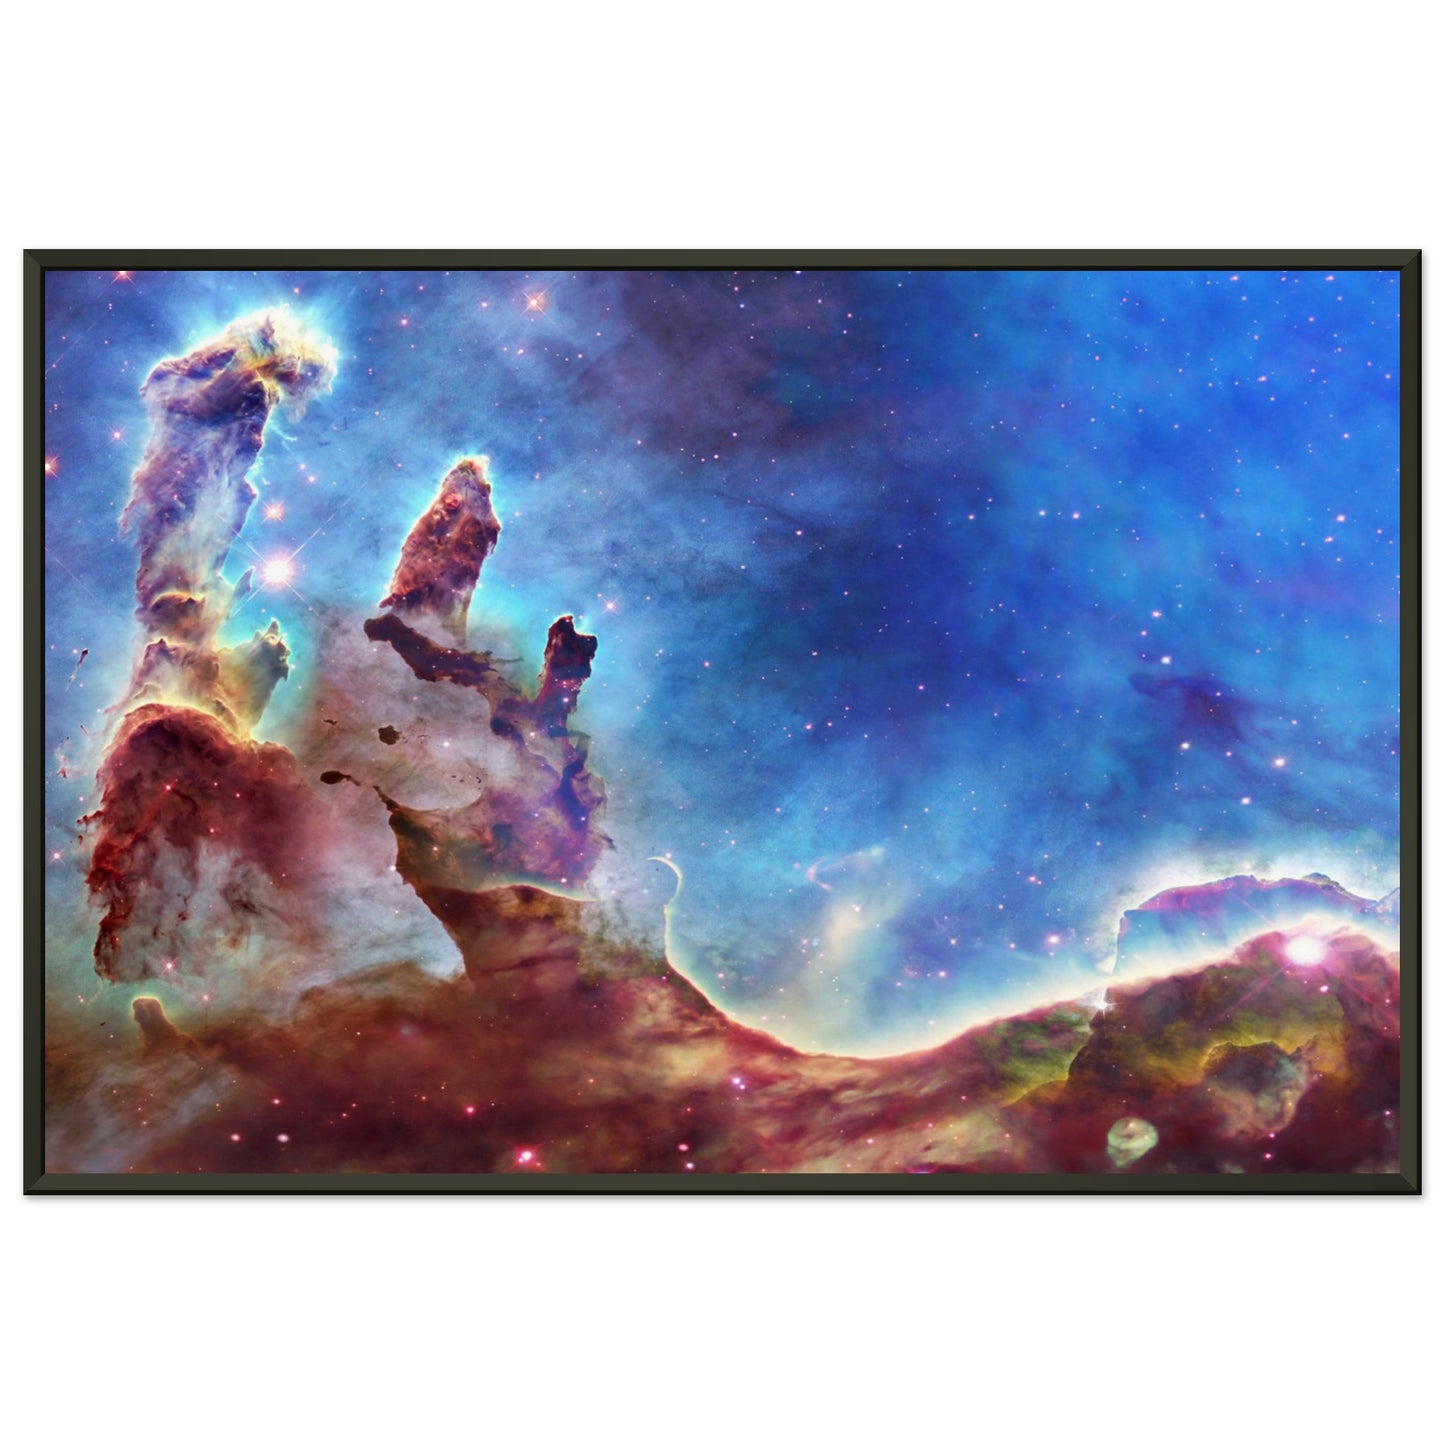 The "Pillars of Creation" within the Eagle Nebula